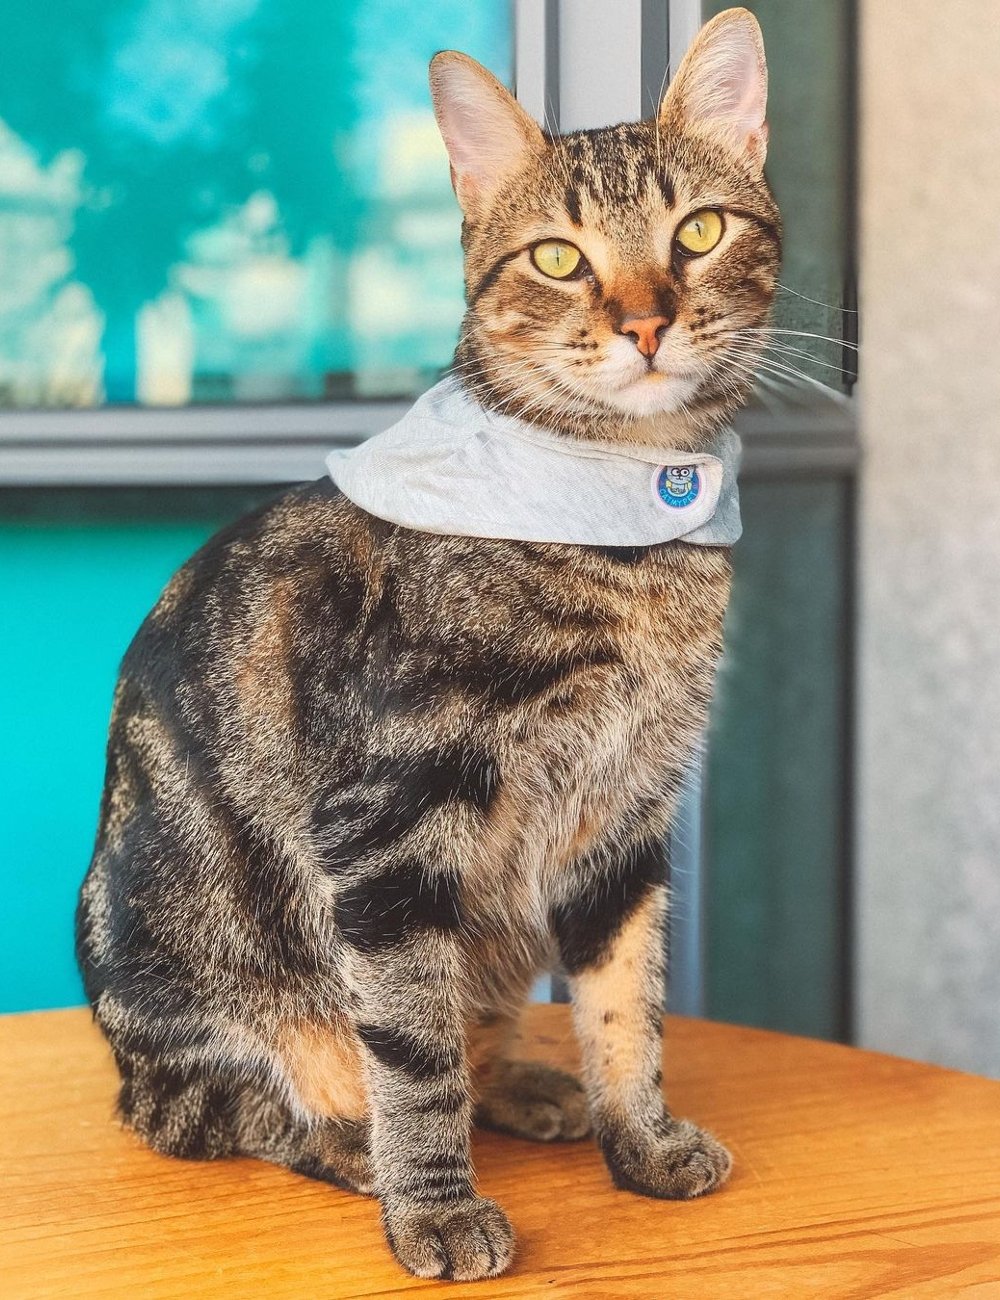 Cat My Pet - bandana - Moda pet - verão - street style - https://stealthelook.com.br